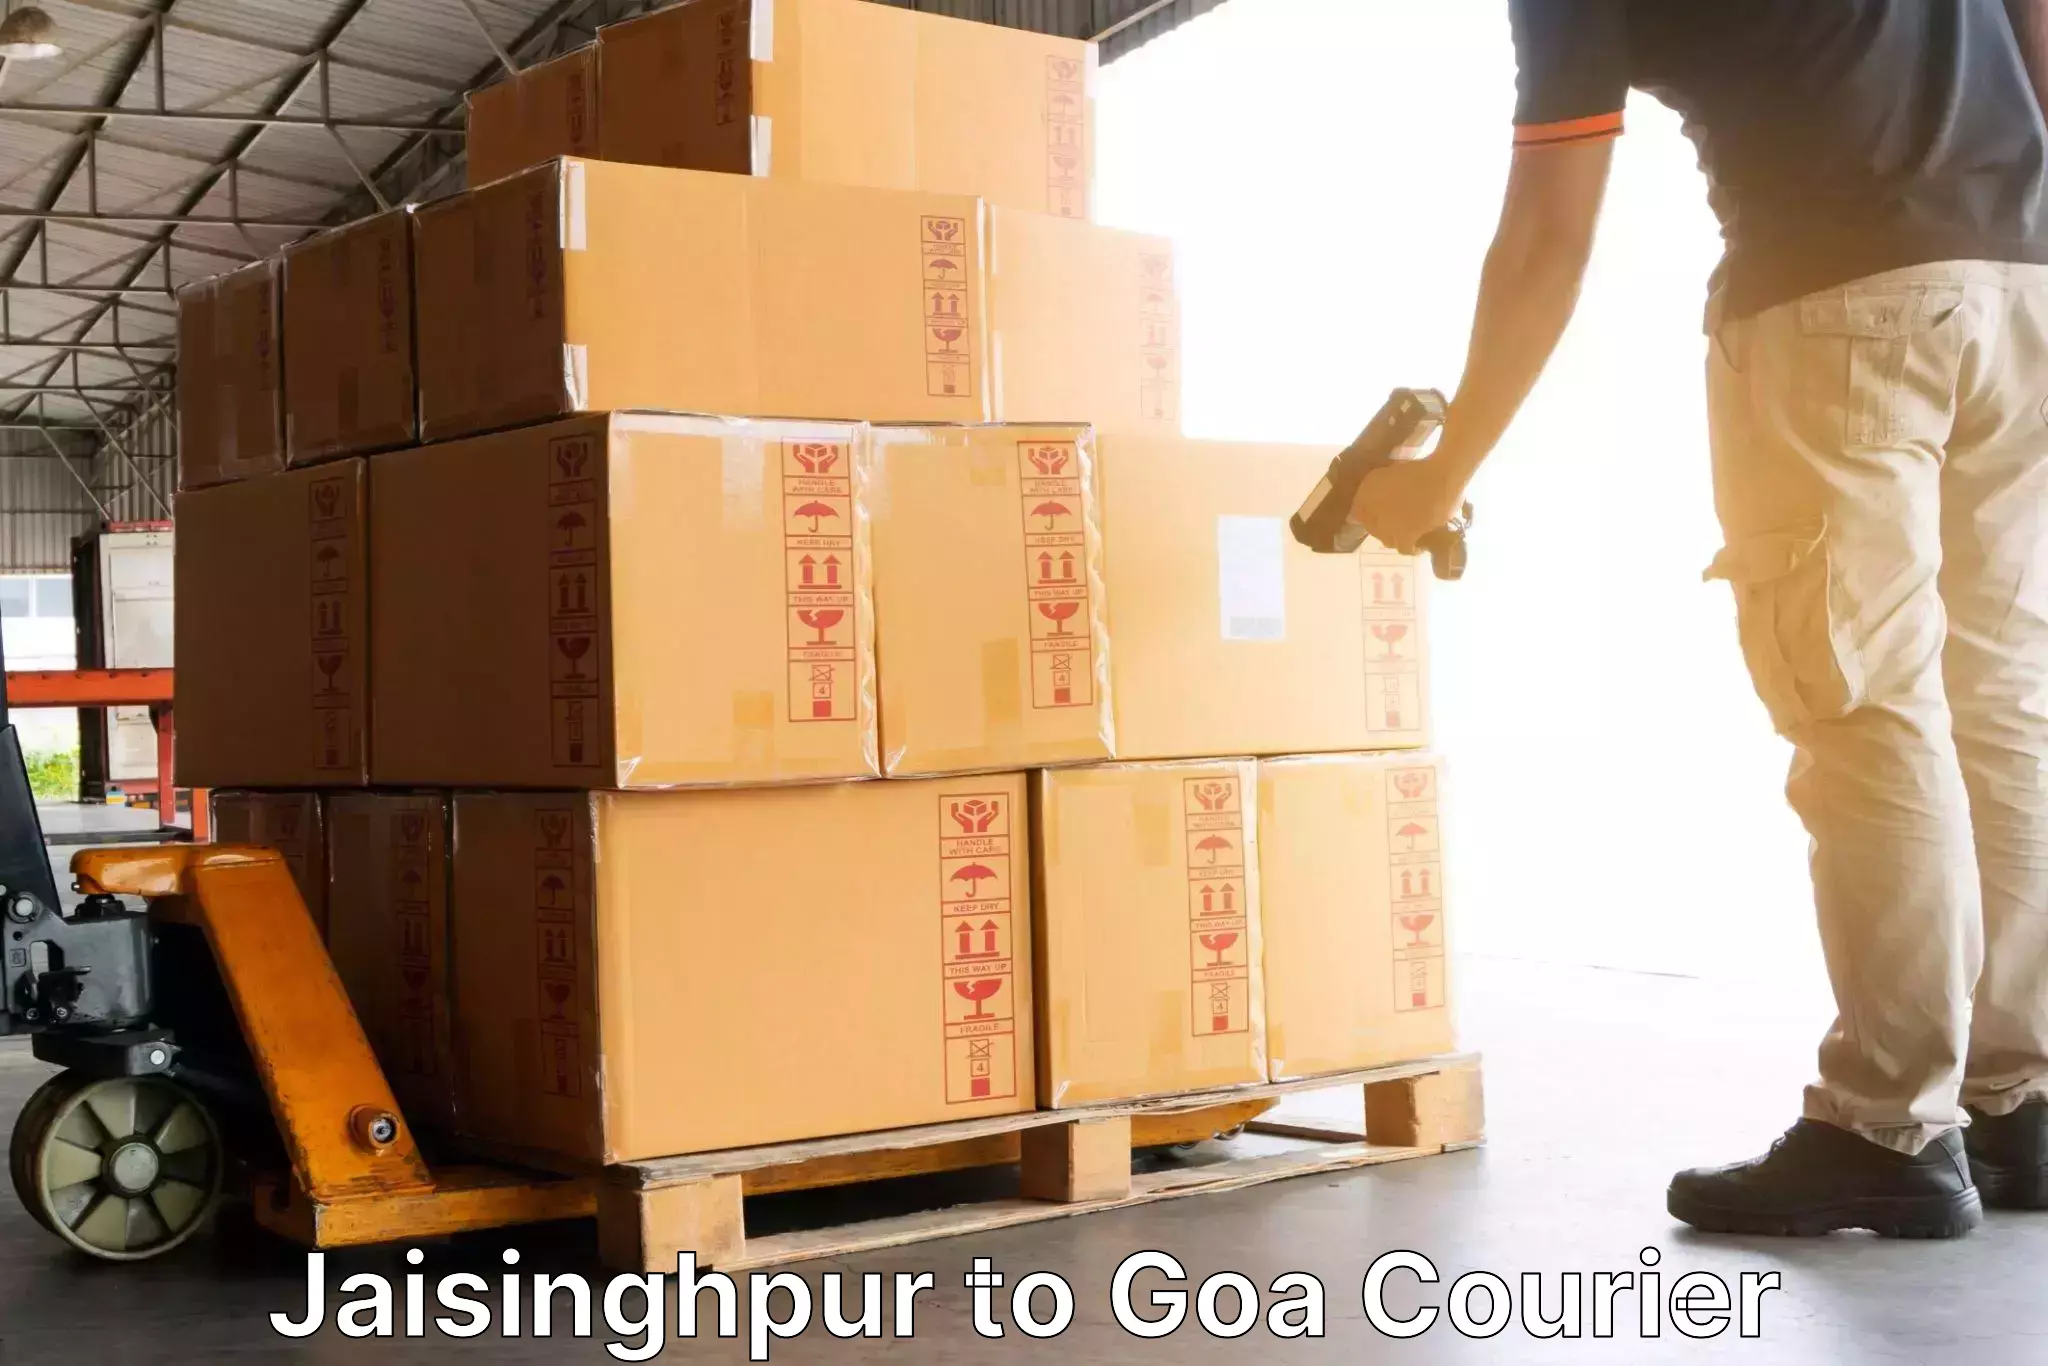 Express delivery network in Jaisinghpur to Ponda